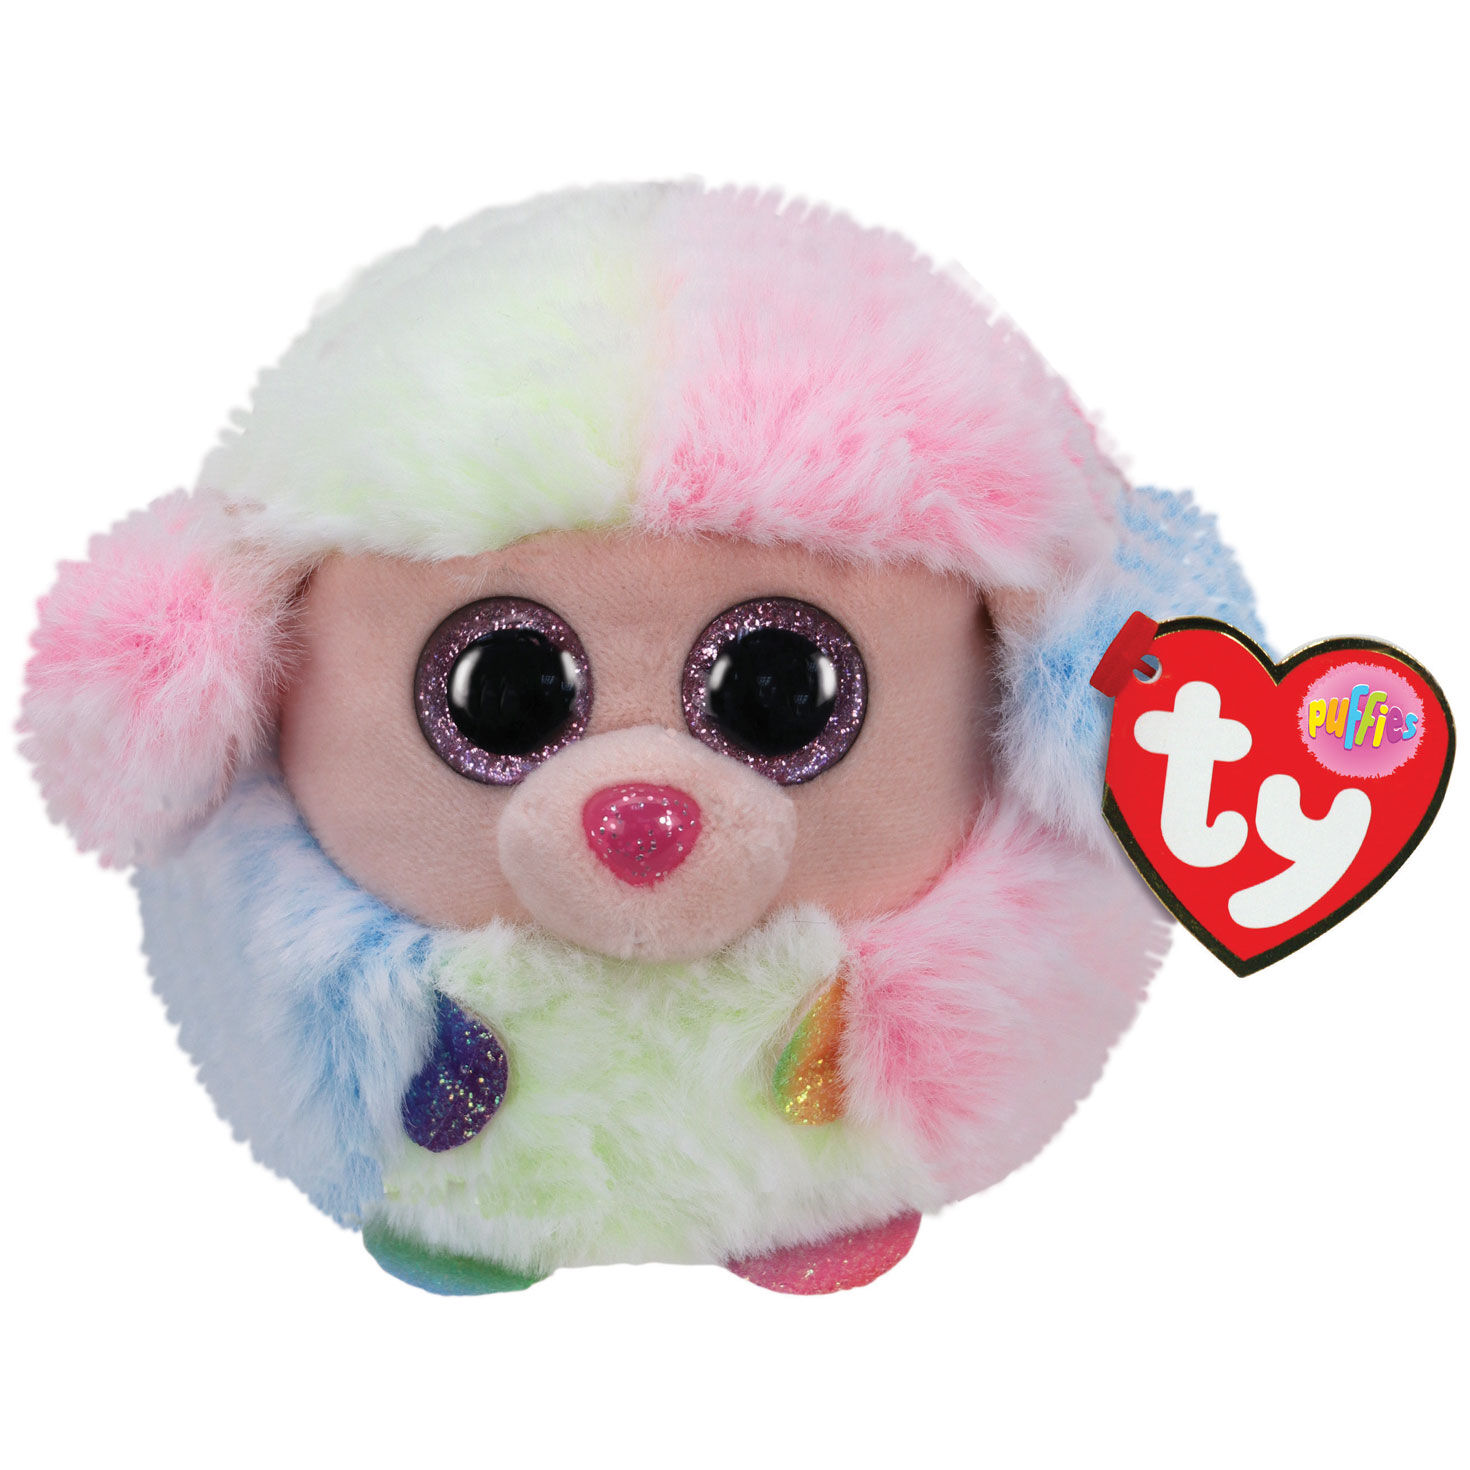 rainbow scooby doo stuffed animal